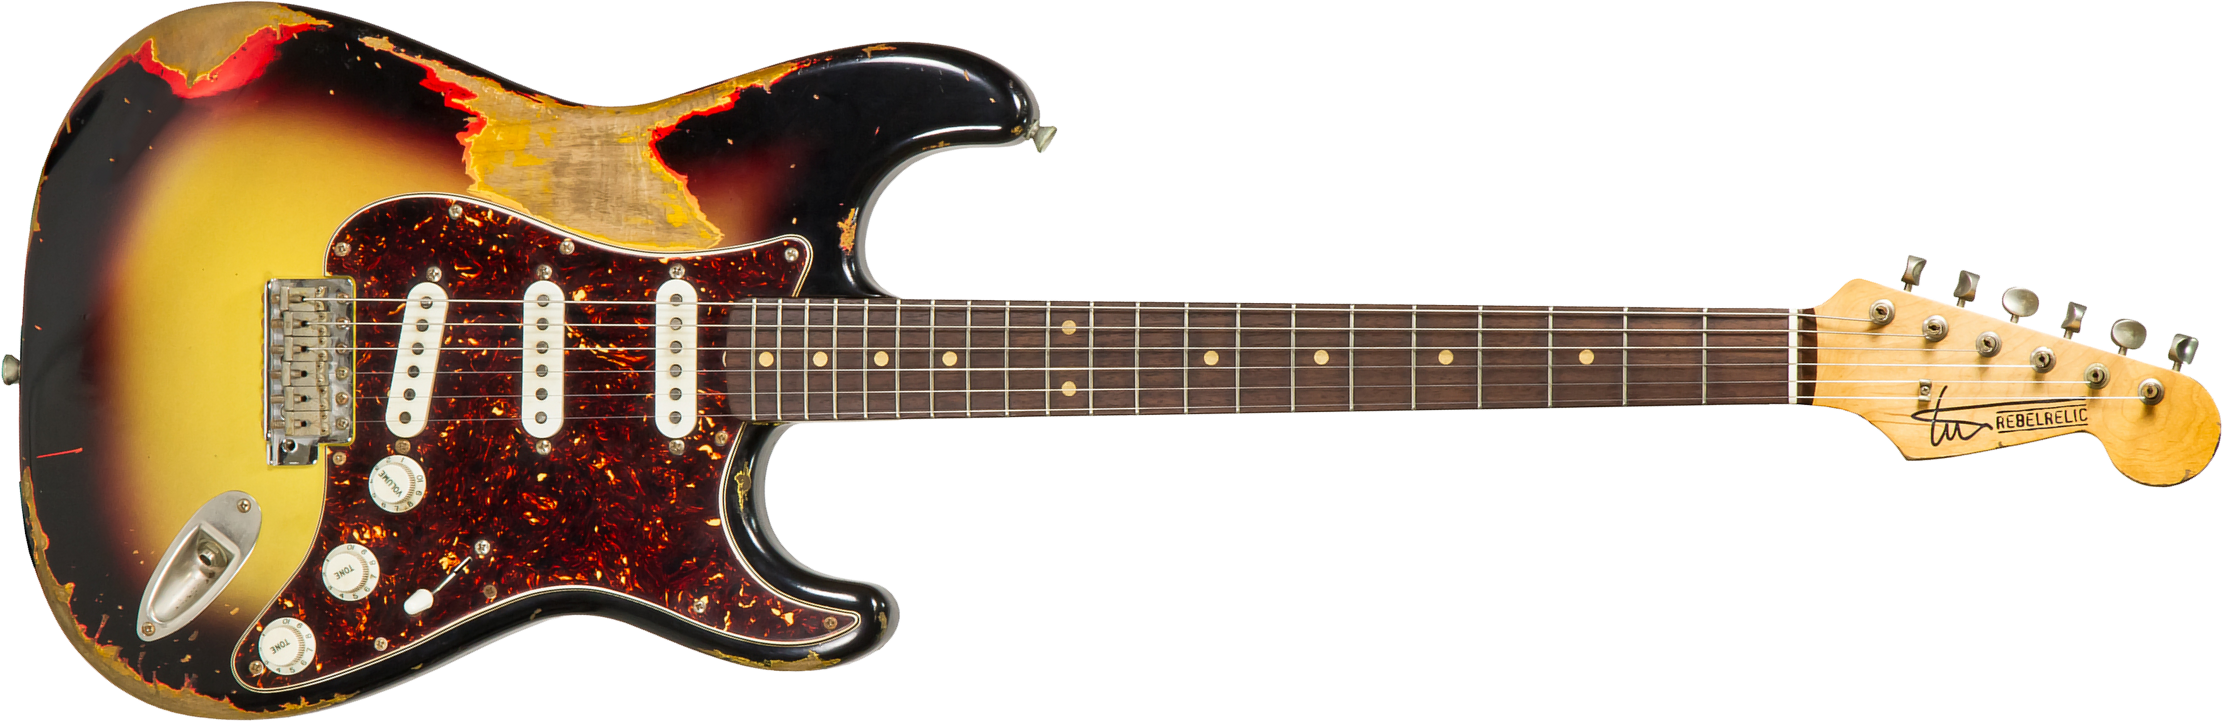 Rebelrelic S-series 62 Rw #62110 - Heavy Aging 3-tone Sunburst - Elektrische gitaar in Str-vorm - Main picture